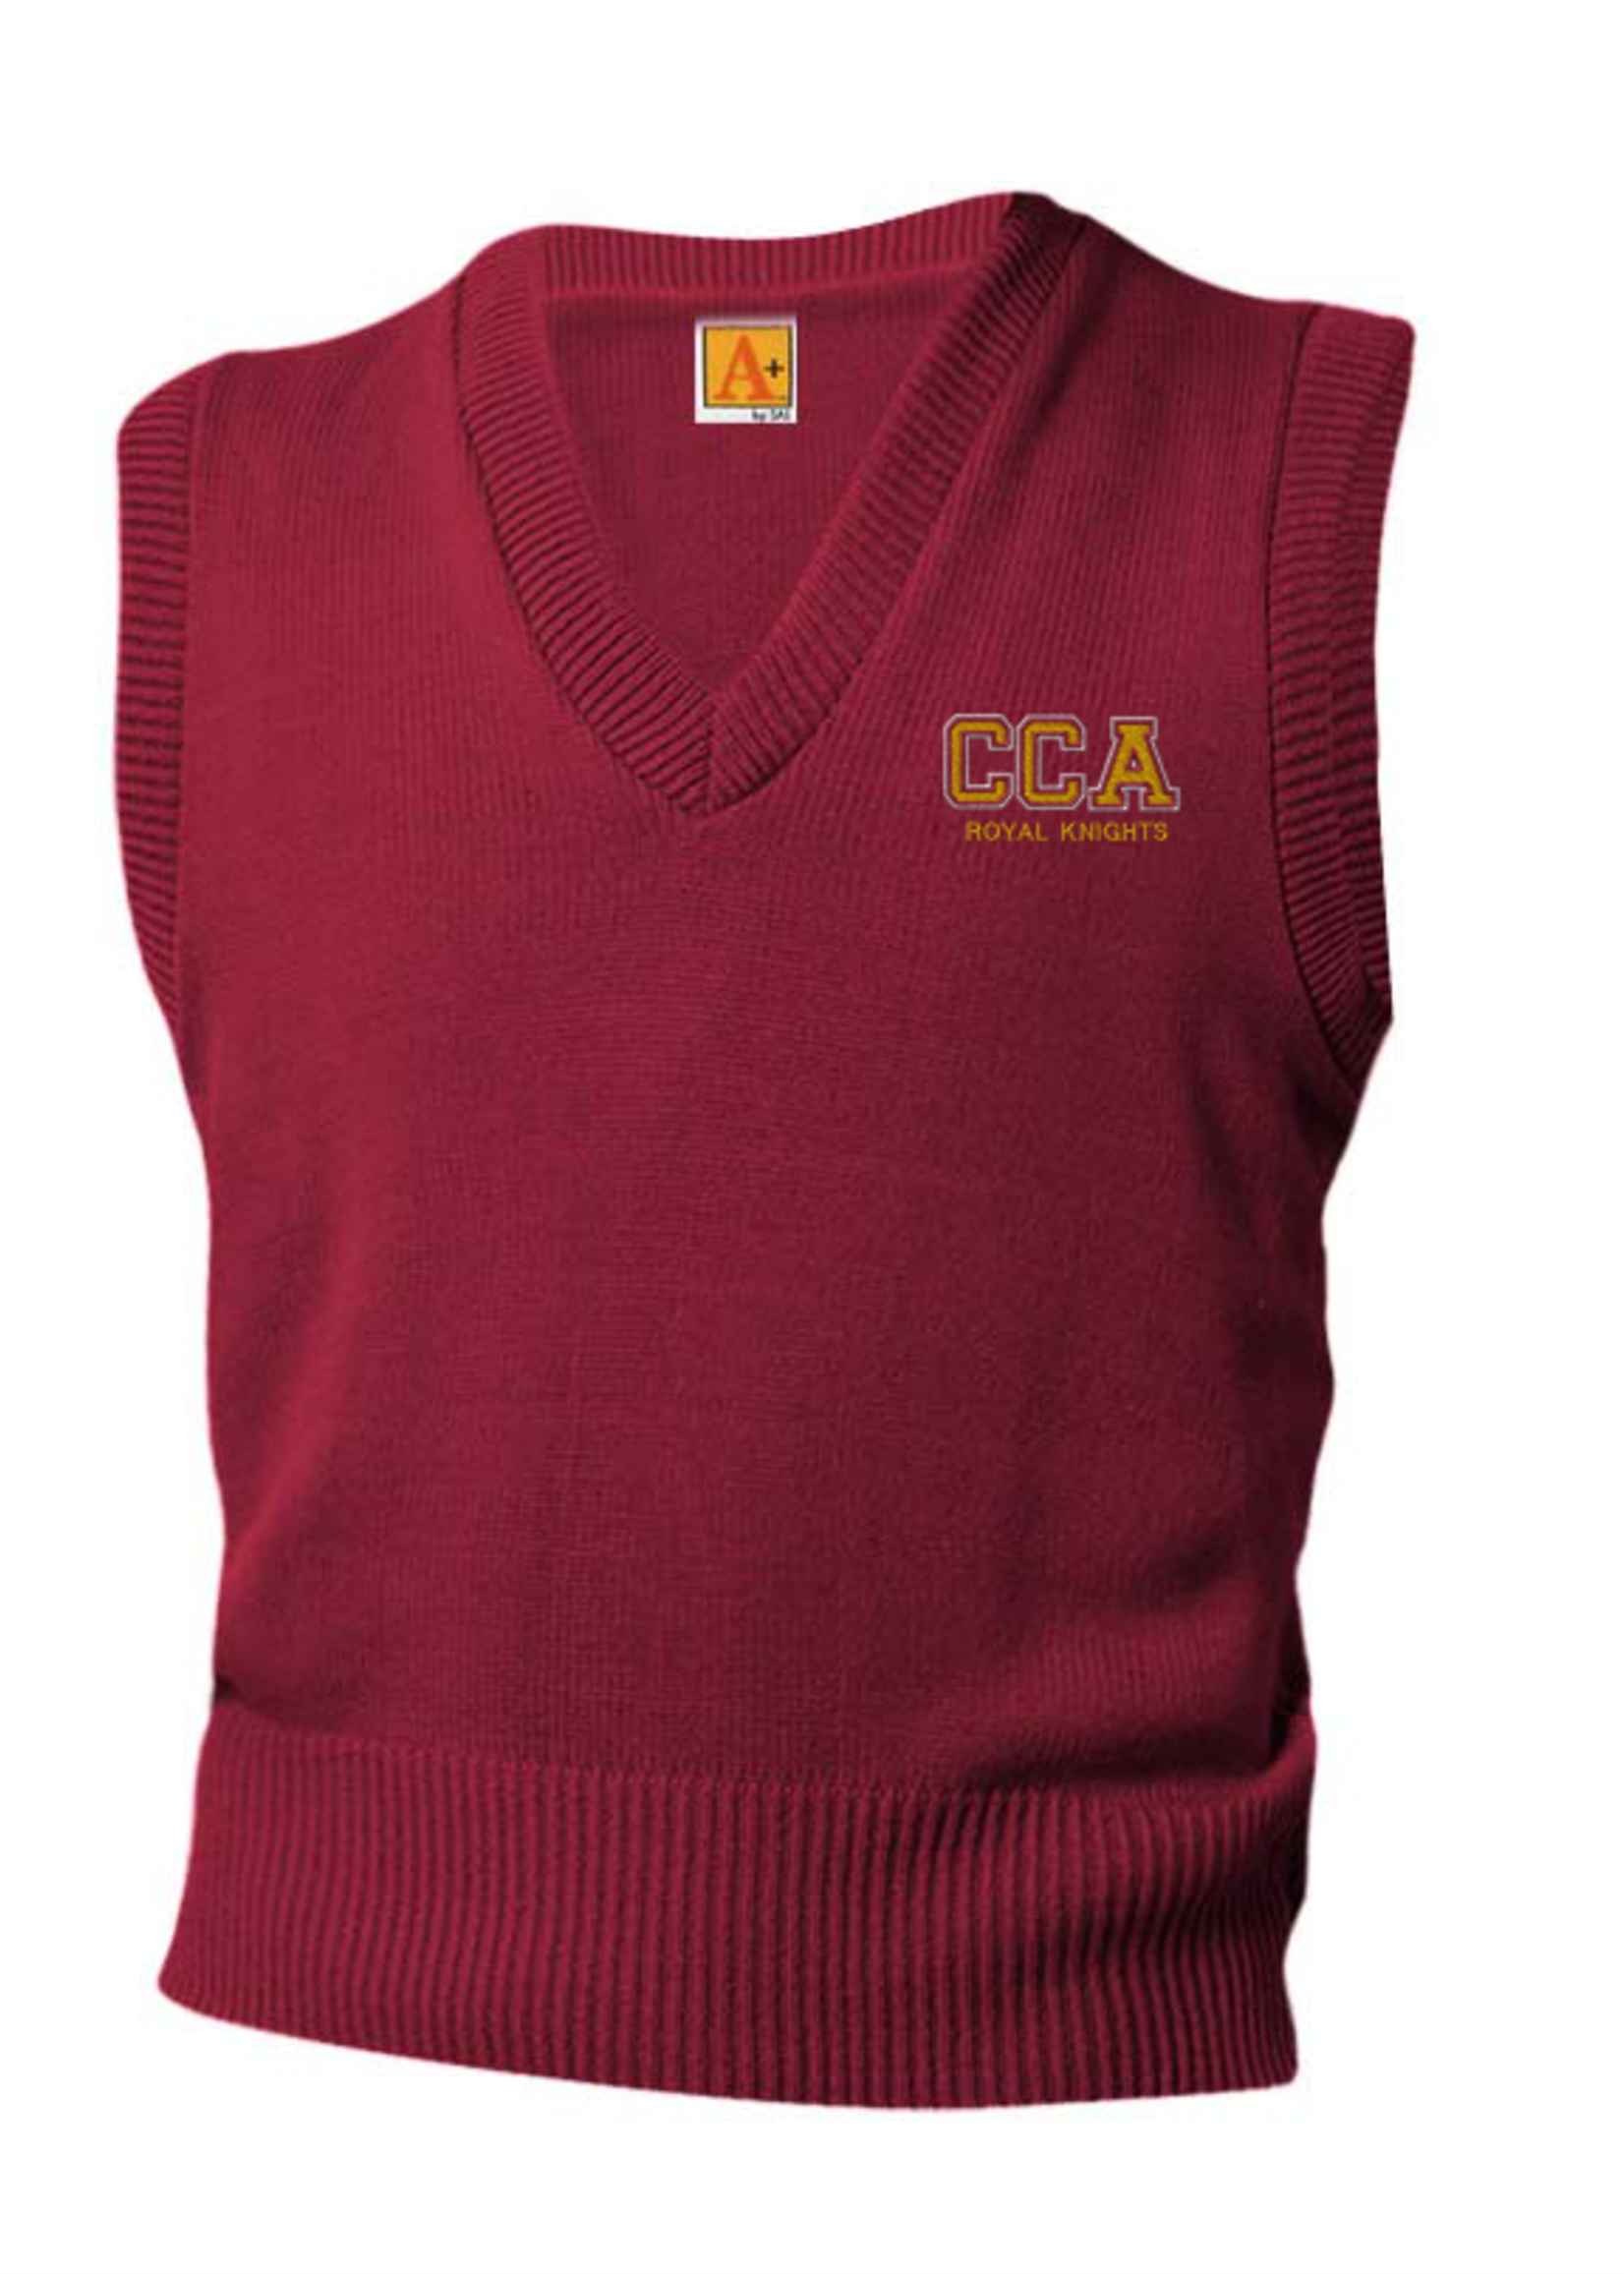 TUS CCA V-neck sweater vest